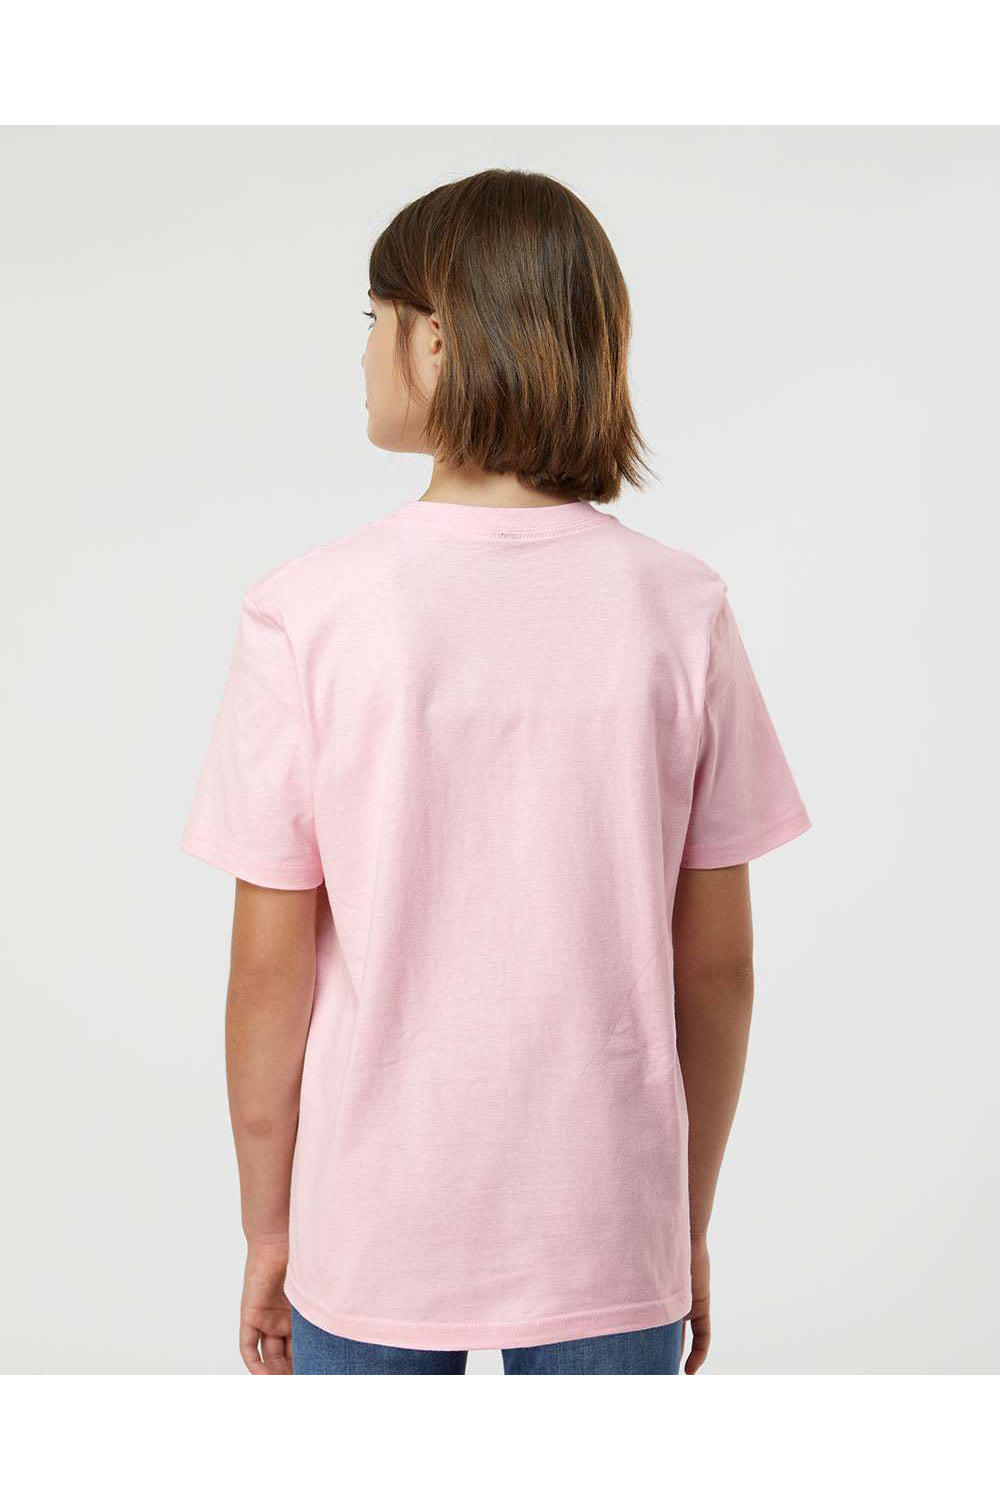 Tultex 295 Youth Jersey Short Sleeve Crewneck T-Shirt Light Pink Model Back